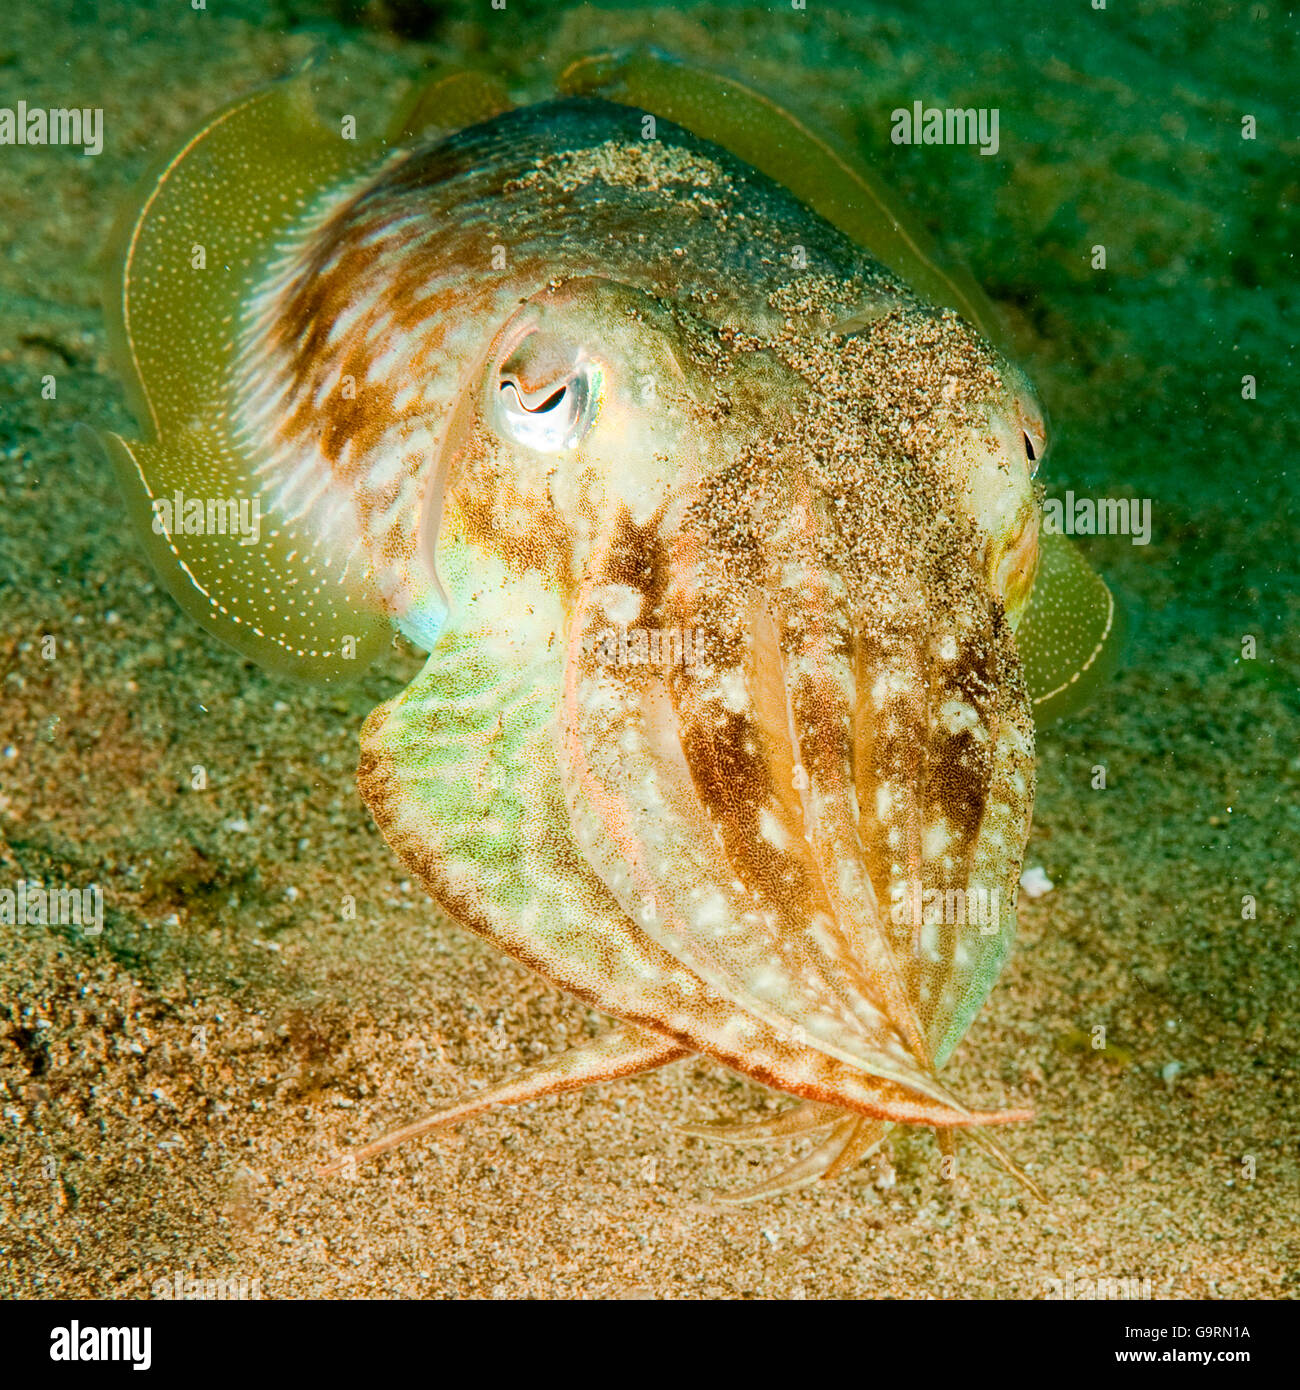 Tintenfische, Kalmare, Kanaren, Atlantik / (Sepia Officinalis) Stockfoto